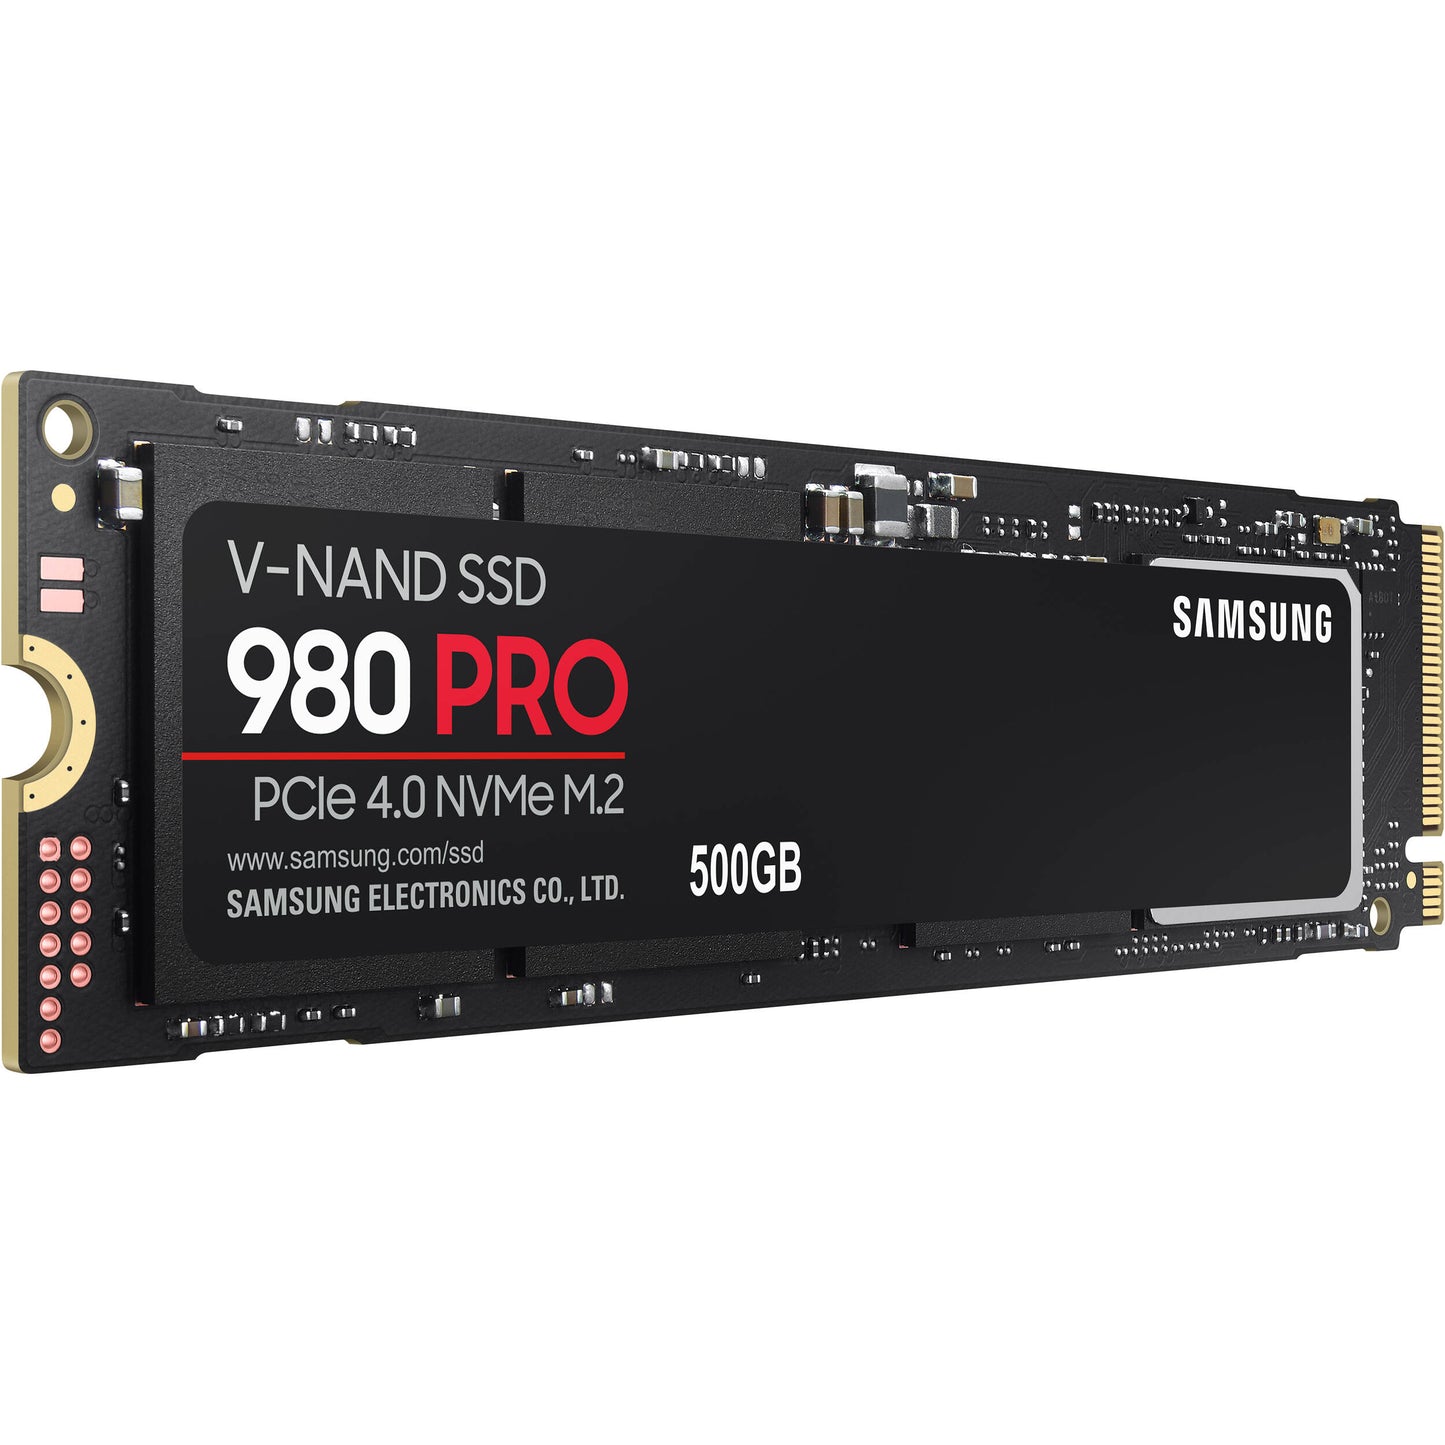 Samsung 980 Pro 500GB NVMe SSD